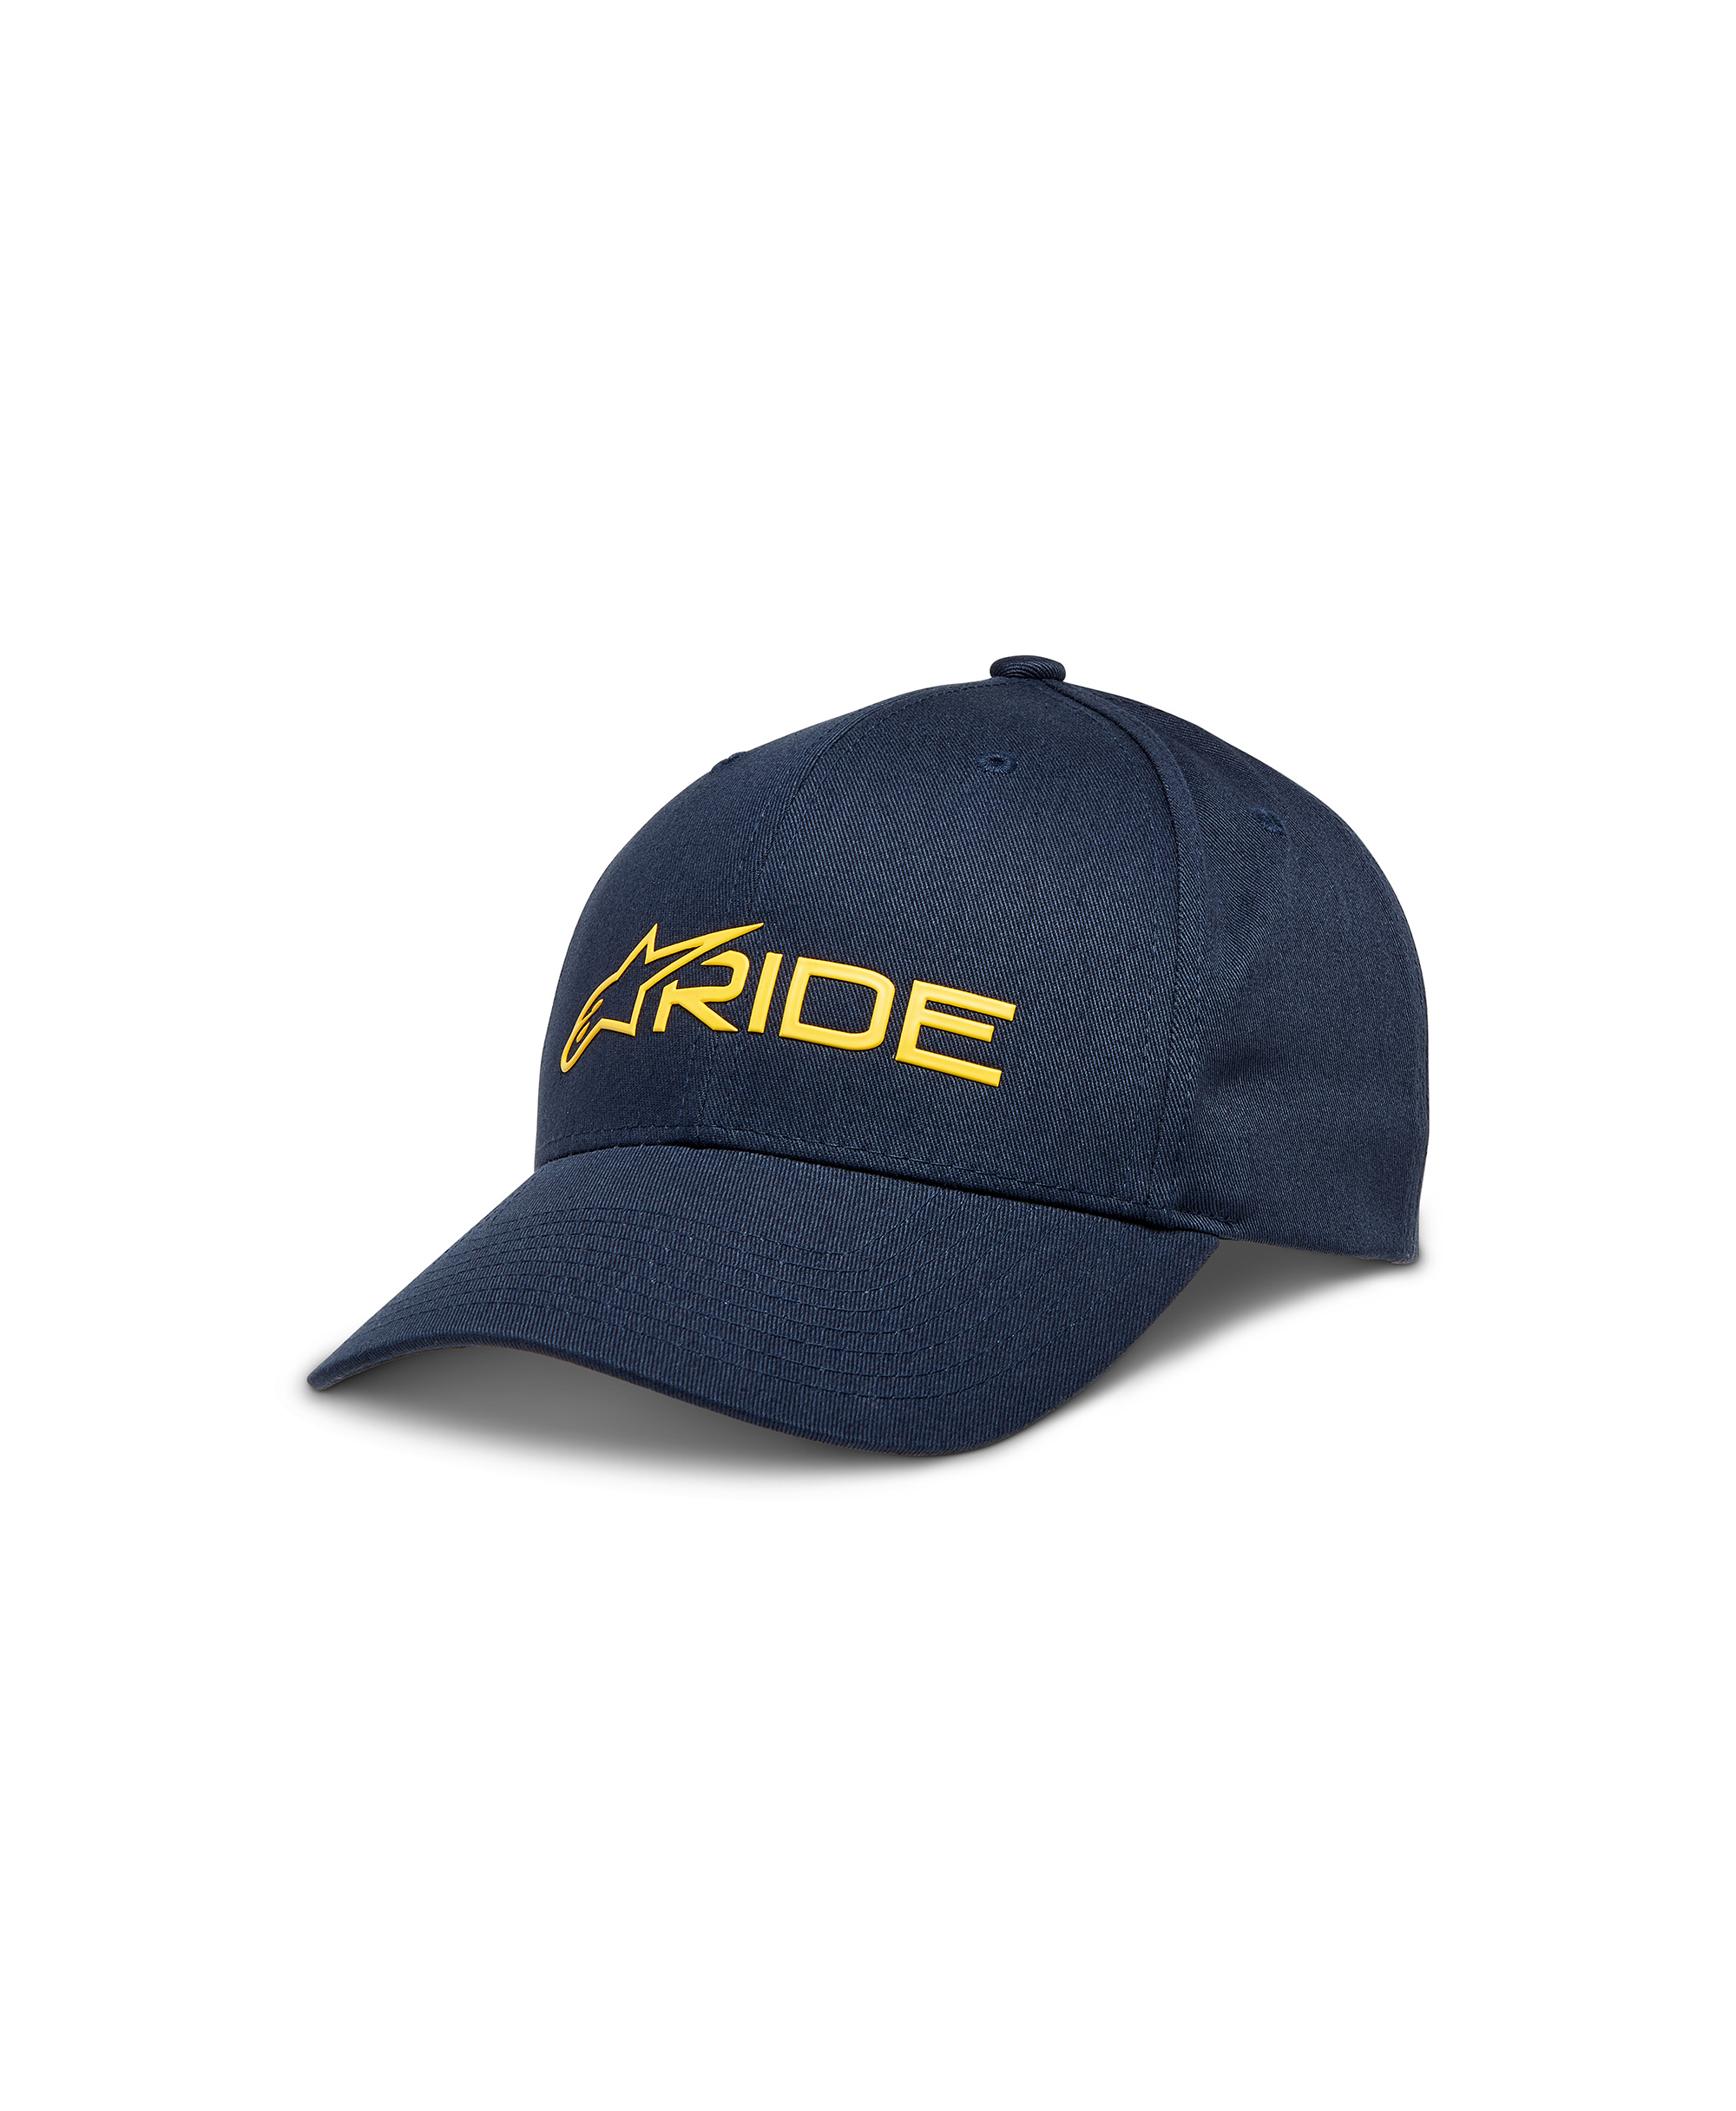 RIDE 3.0 HAT NAVY/GOLD